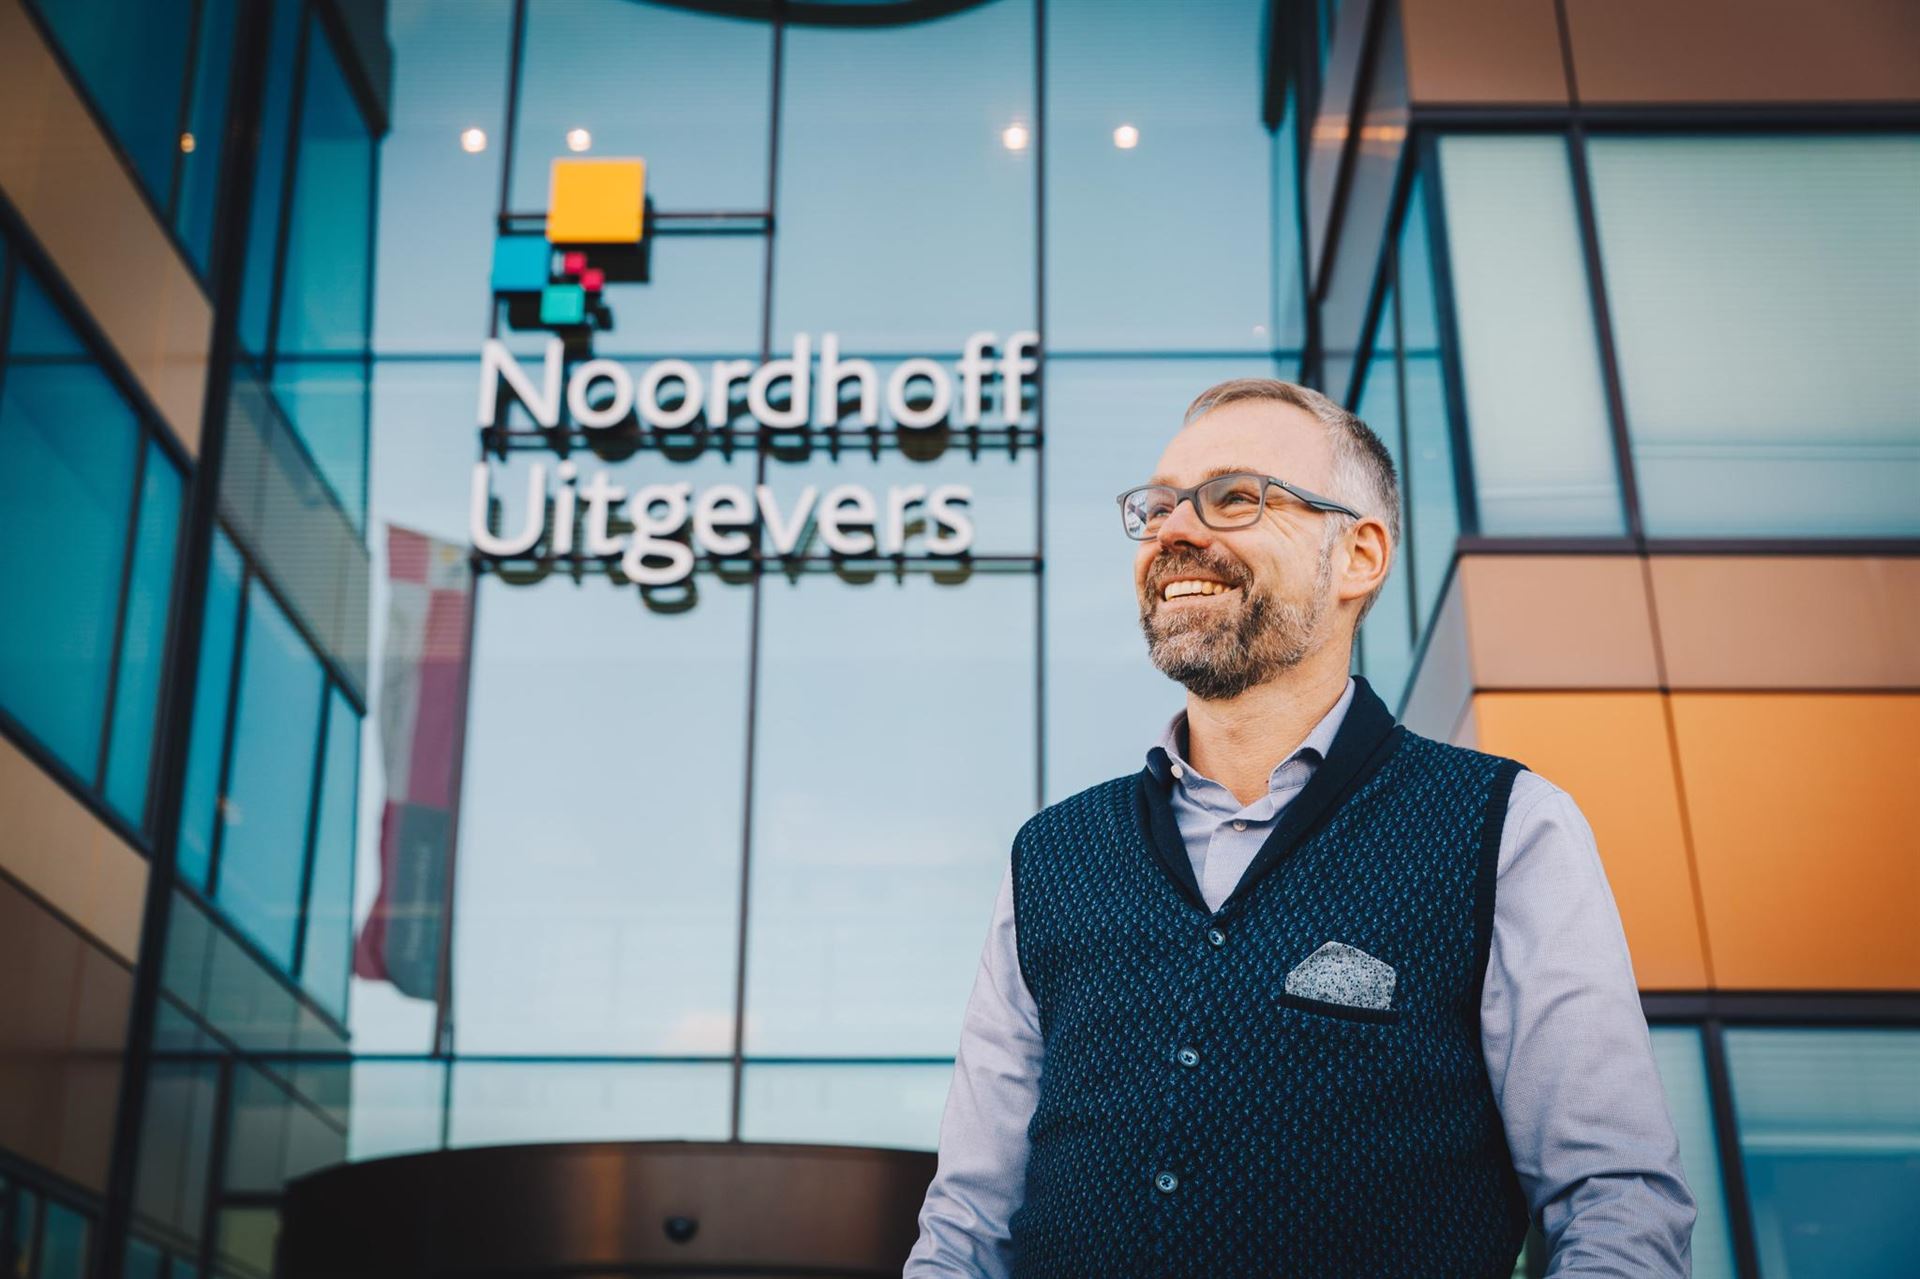 Sieger Kuik at Noordhoff Publisher HQ, customer of Payt